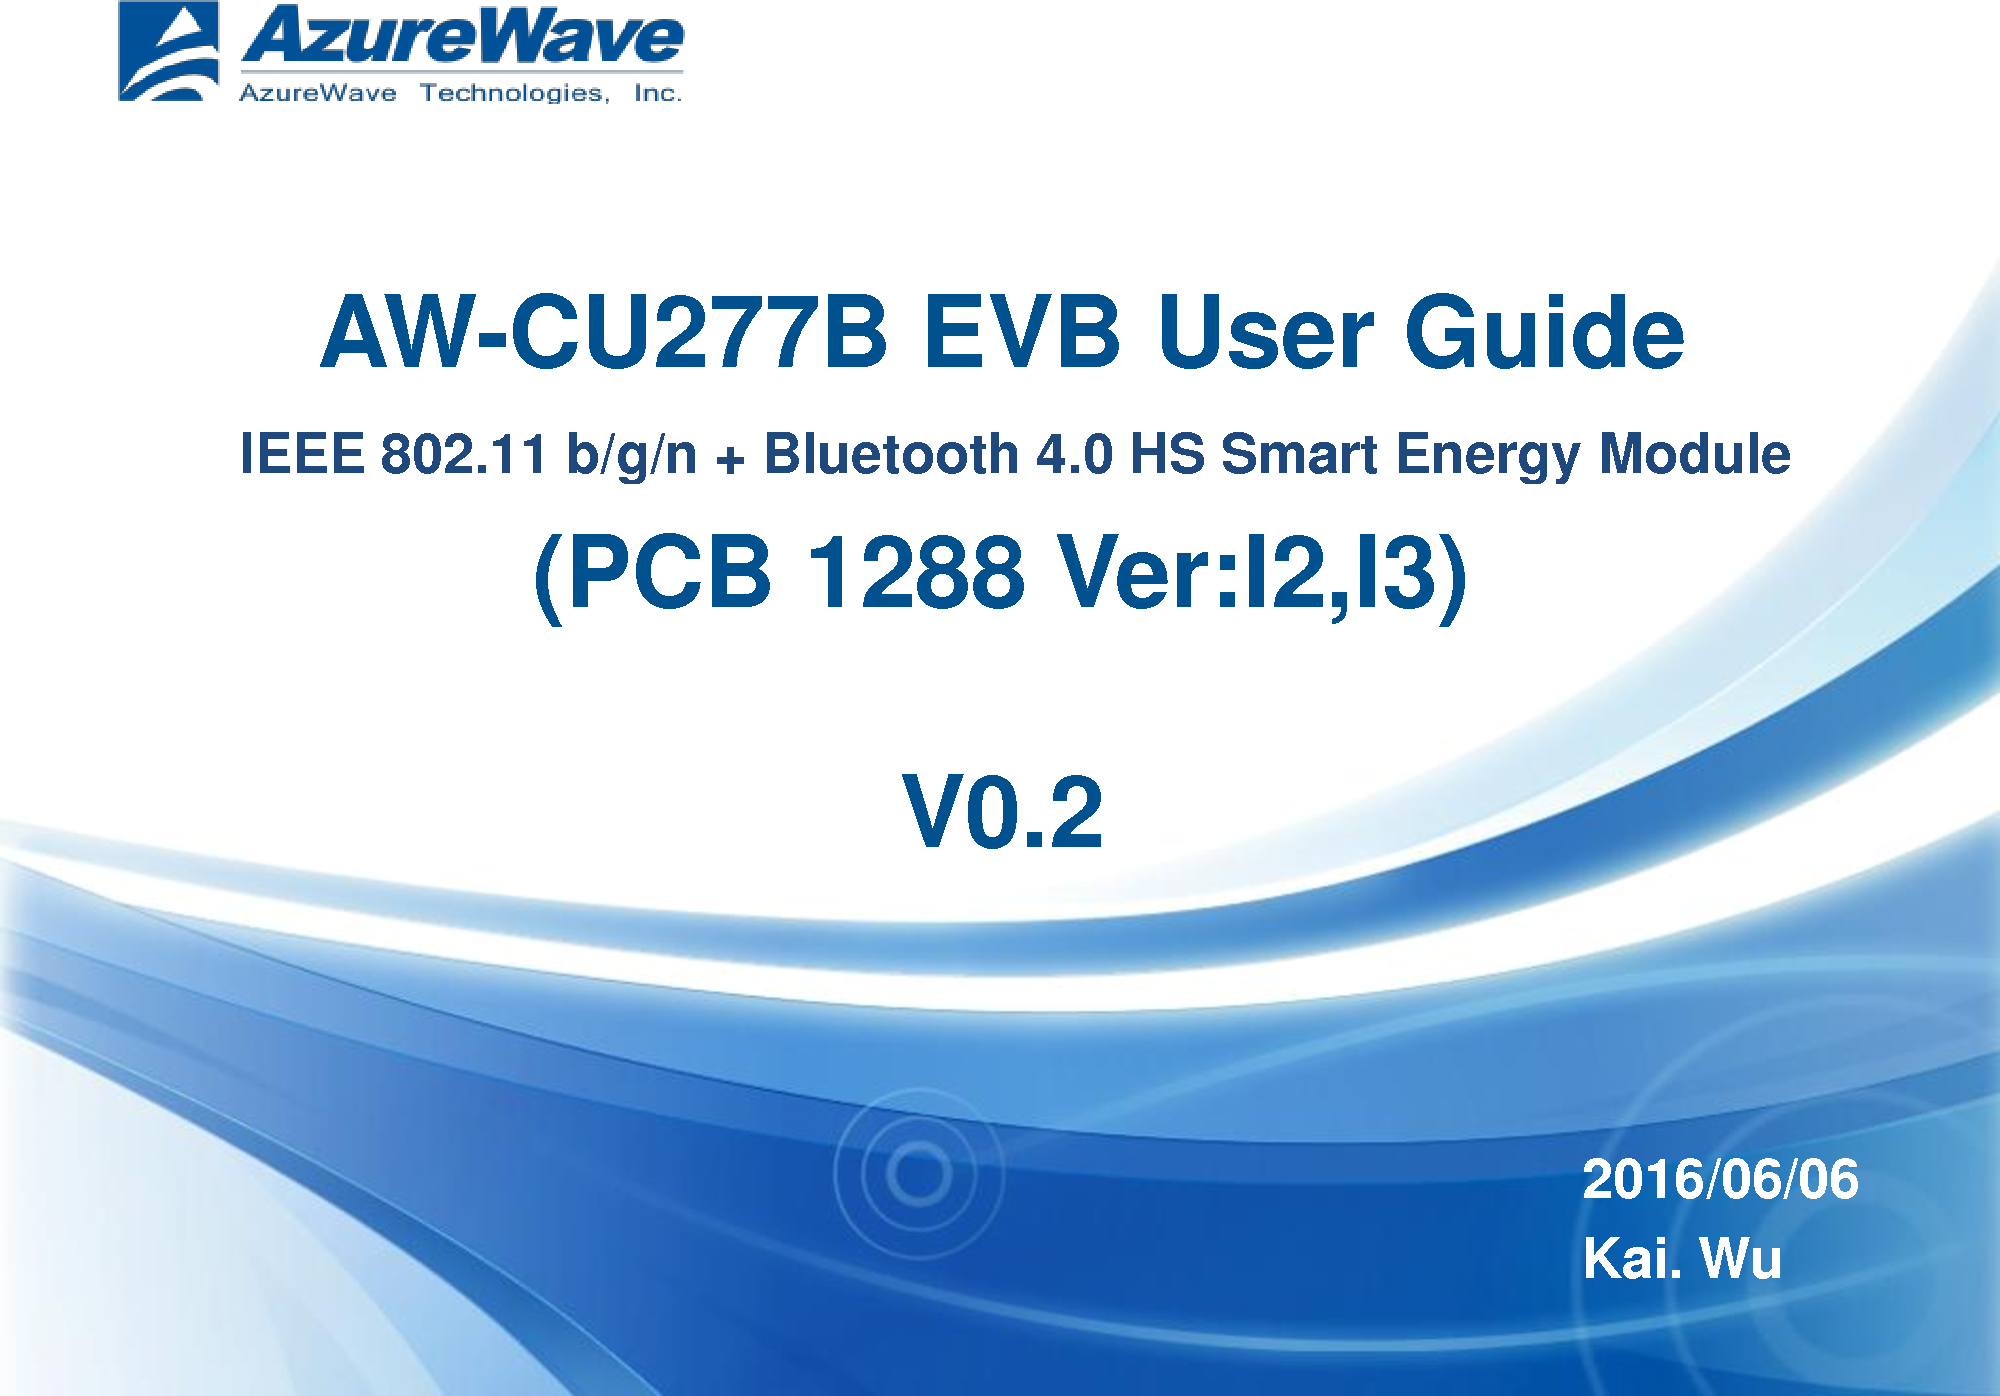 AW-CU277B EVB User Guide  (PCB 1288 Ver:I2,I3)  V0.2 2016/06/06 Kai. Wu IEEE 802.11 b/g/n + Bluetooth 4.0 HS Smart Energy Module